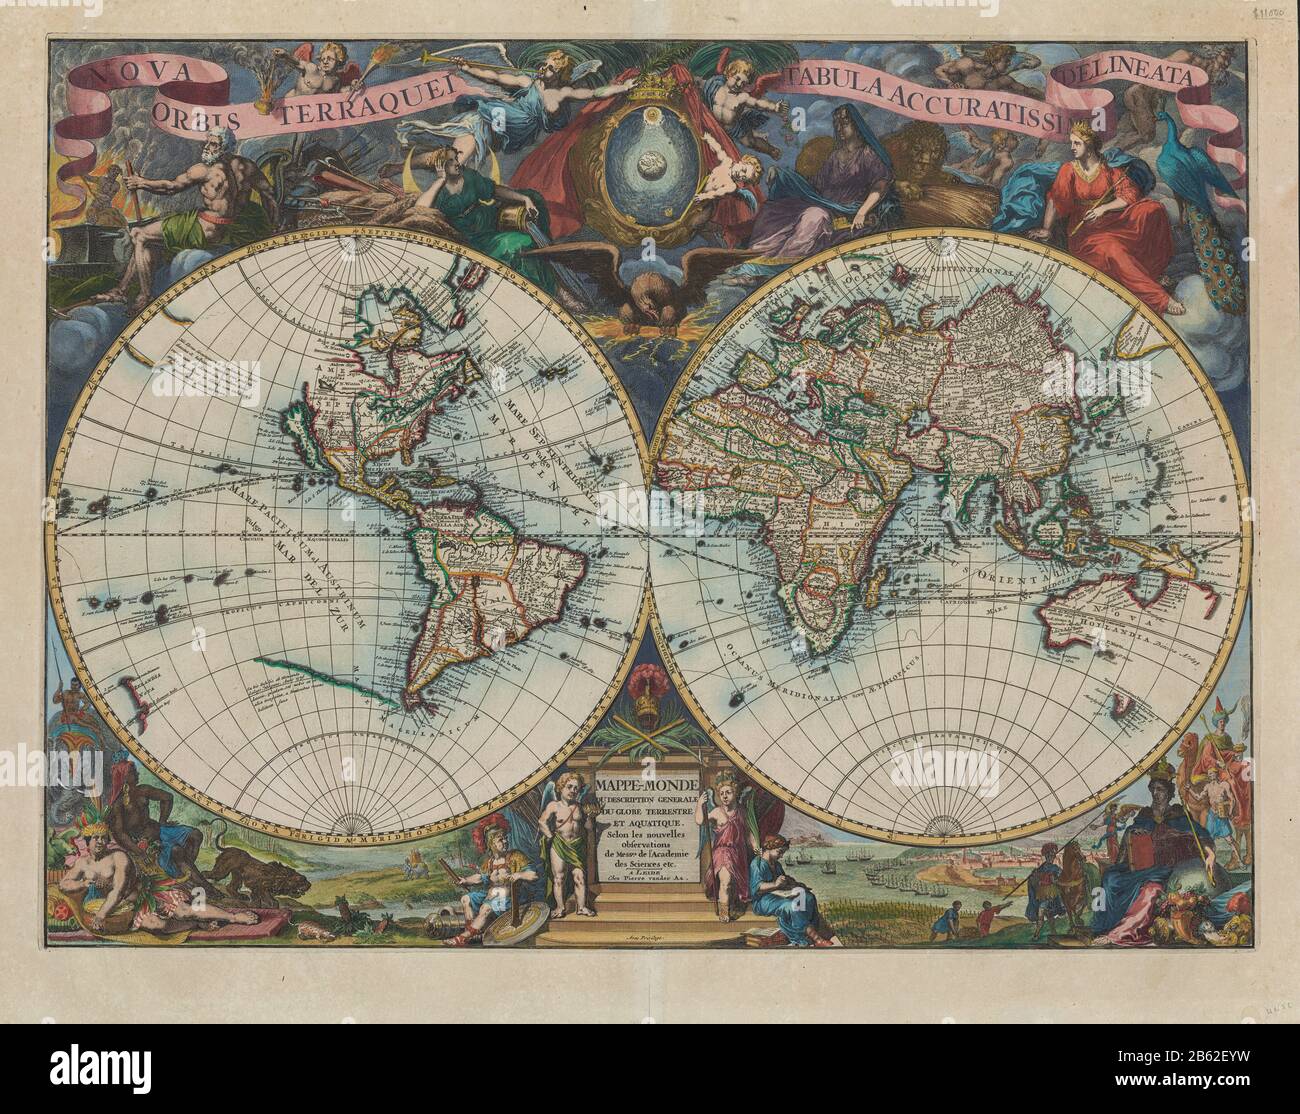 Pieter van der Aa (1659-1733) "Nova orbis terraquei tabula aceratissime delineata". Neue Tabelle der terraqueous Welt genau abgegrenzt. "Mappe- Stockfoto